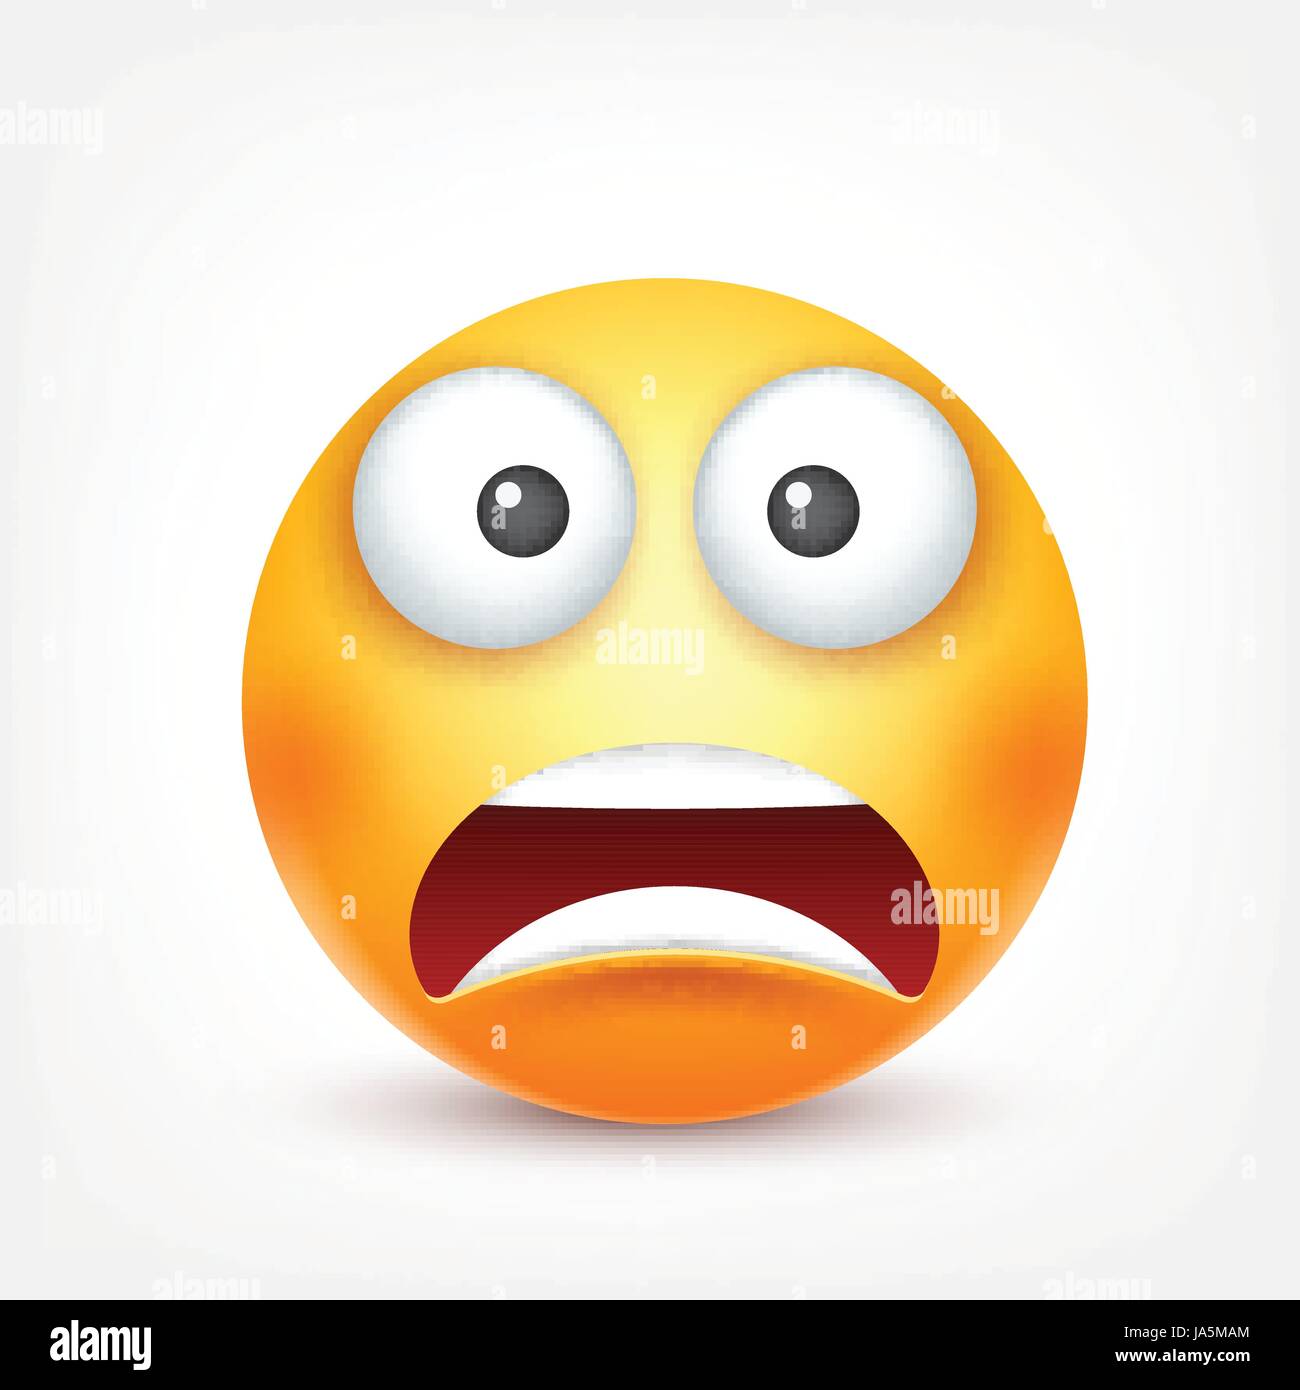 Cartoon face frightened emoji, vector scared facial expression